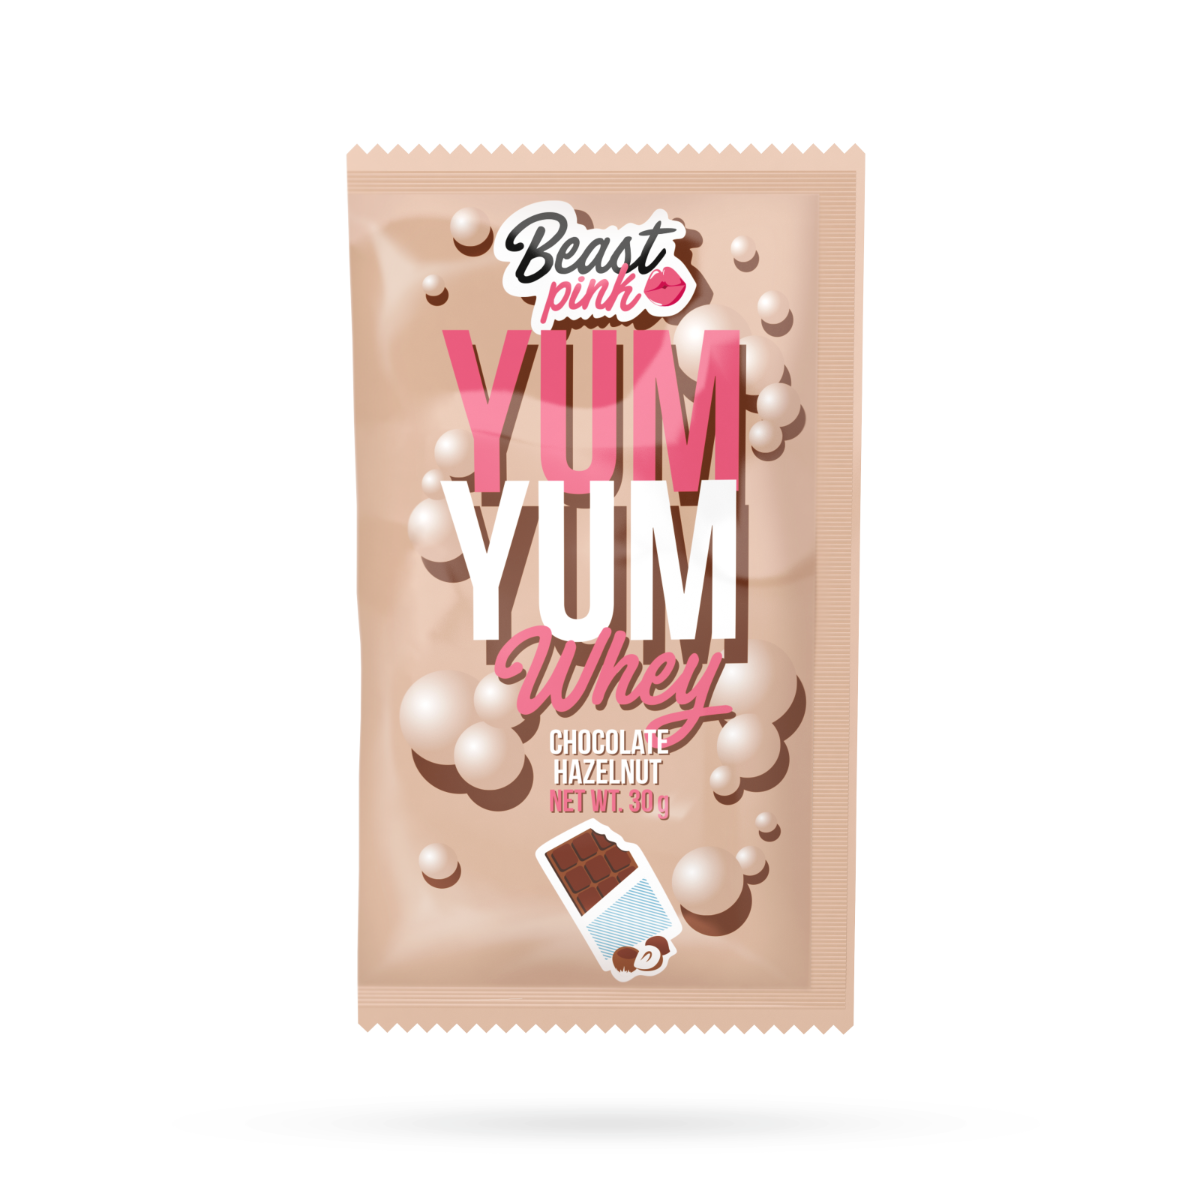 Vzorka proteínu Yum Yum Whey - BeastPink vanilková zmrzlina 400 x 30g